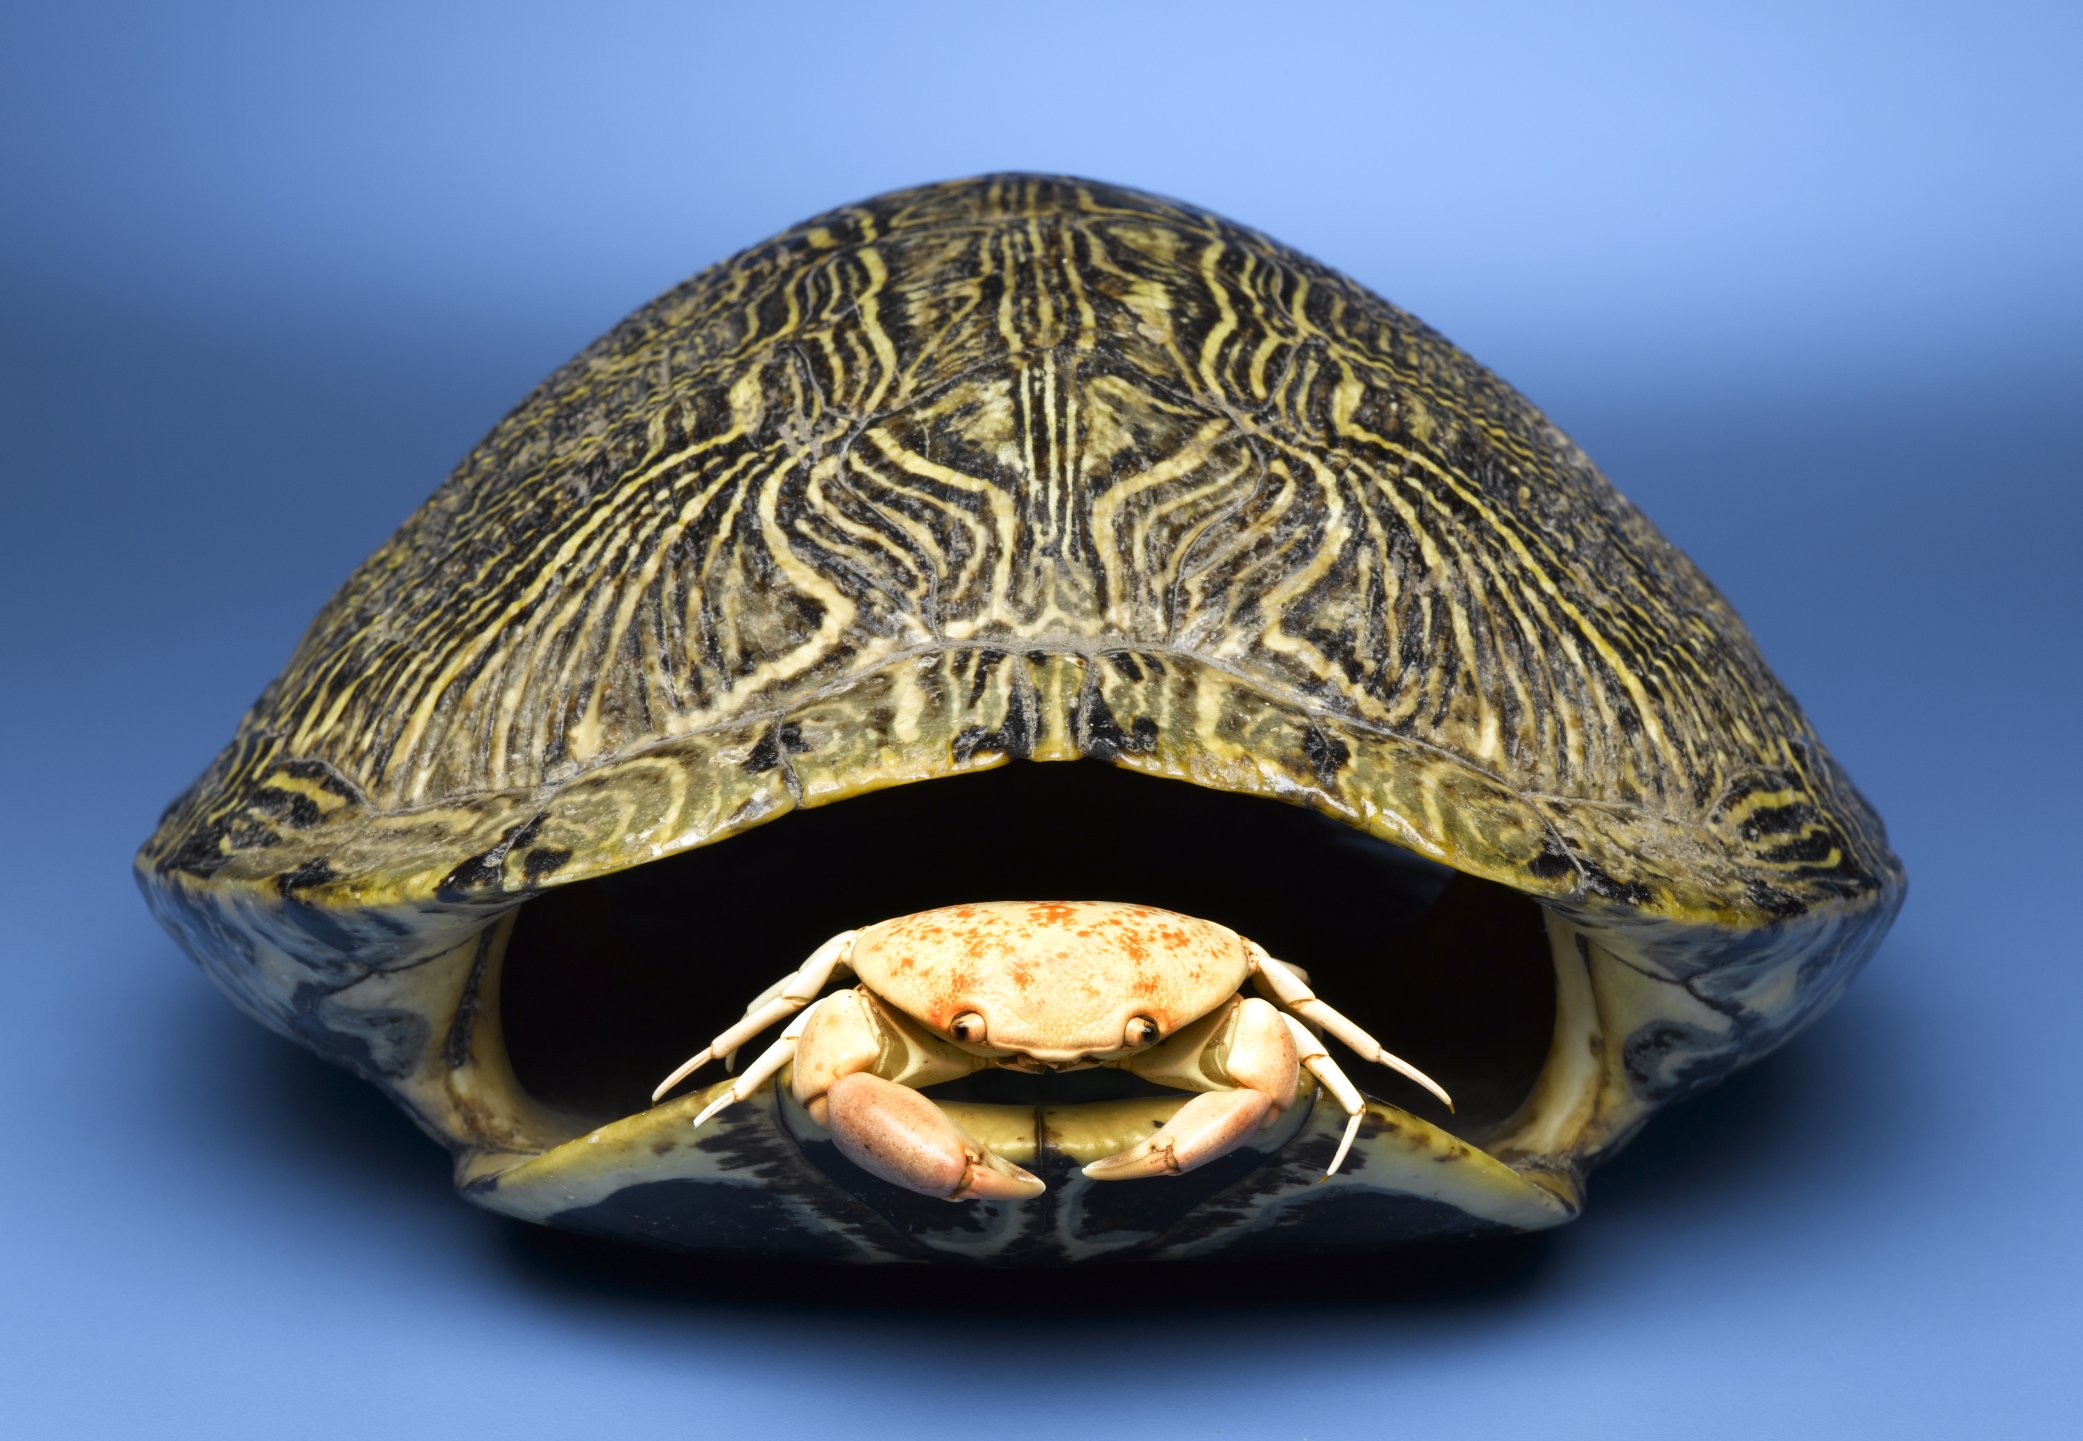 Turtle shell. Черепаха Матамата панцирь. Панцирь черепахи. Панцирь черепах. Черепаший панцирь.